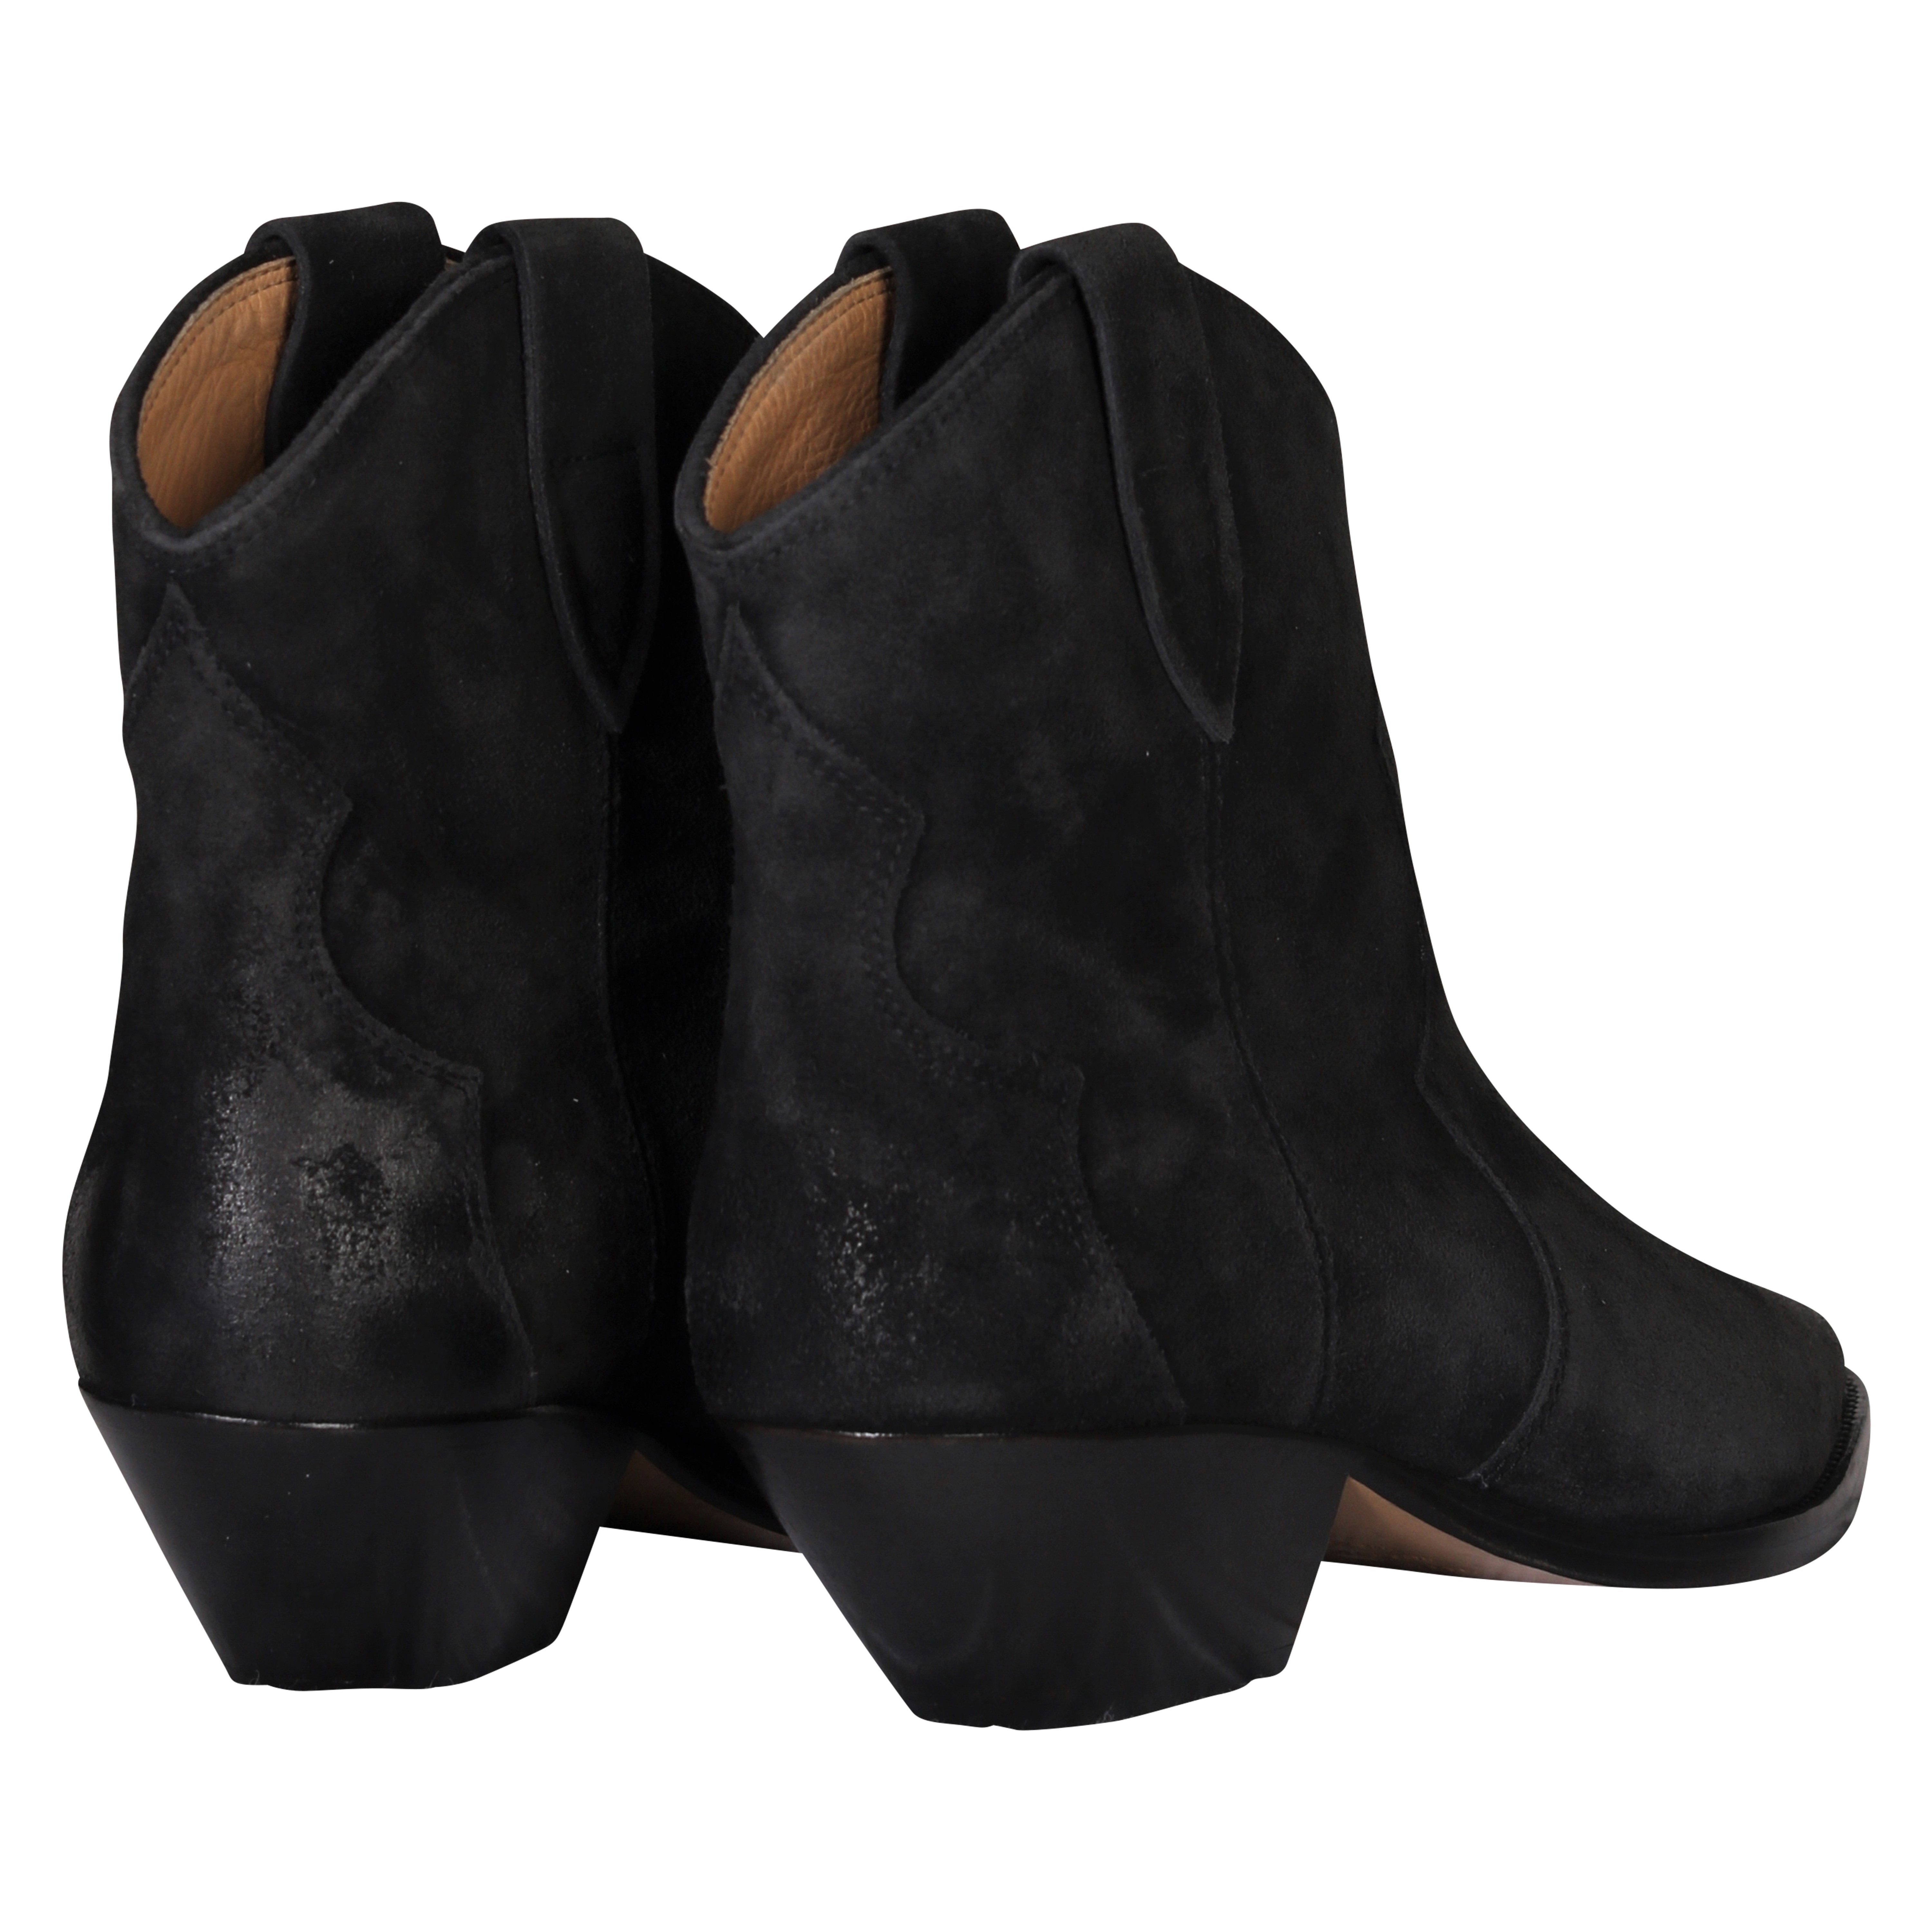 Isabel Marant Dewina Boots in Faded Black 40